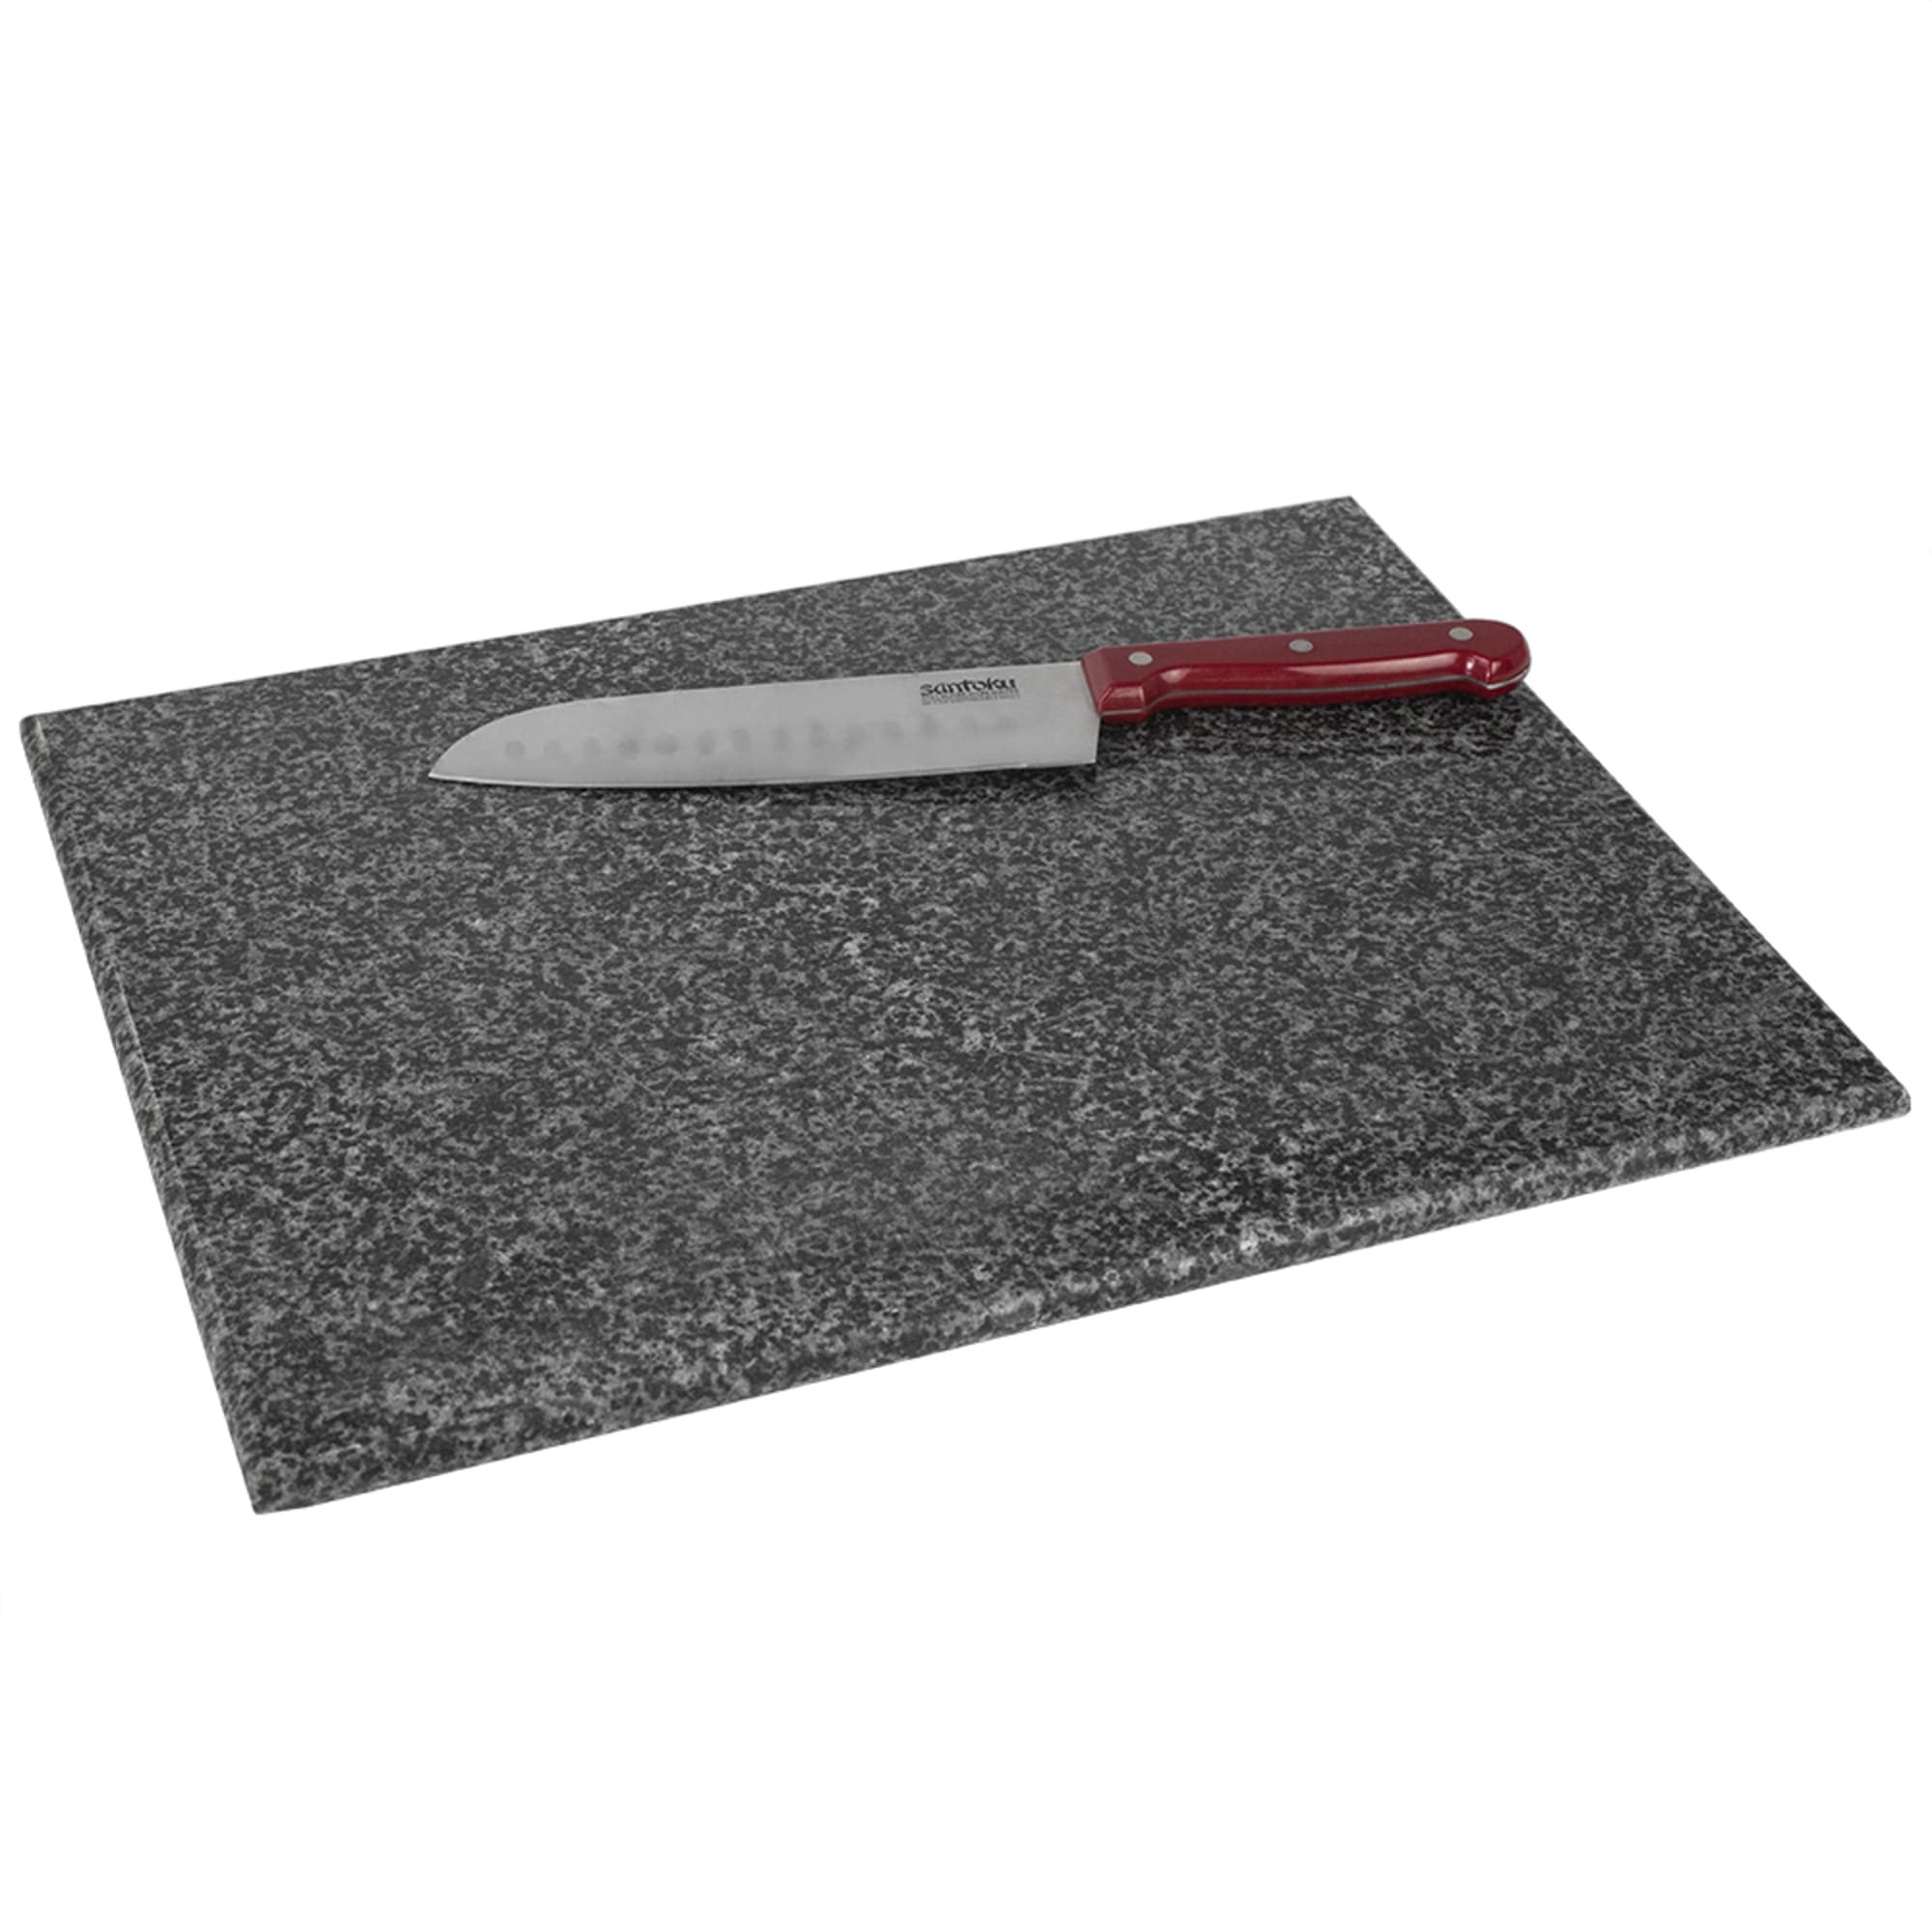 Home Basics 15.5" x 11.5" Granite Cutting Board, Black $12 EACH, CASE PACK OF 4